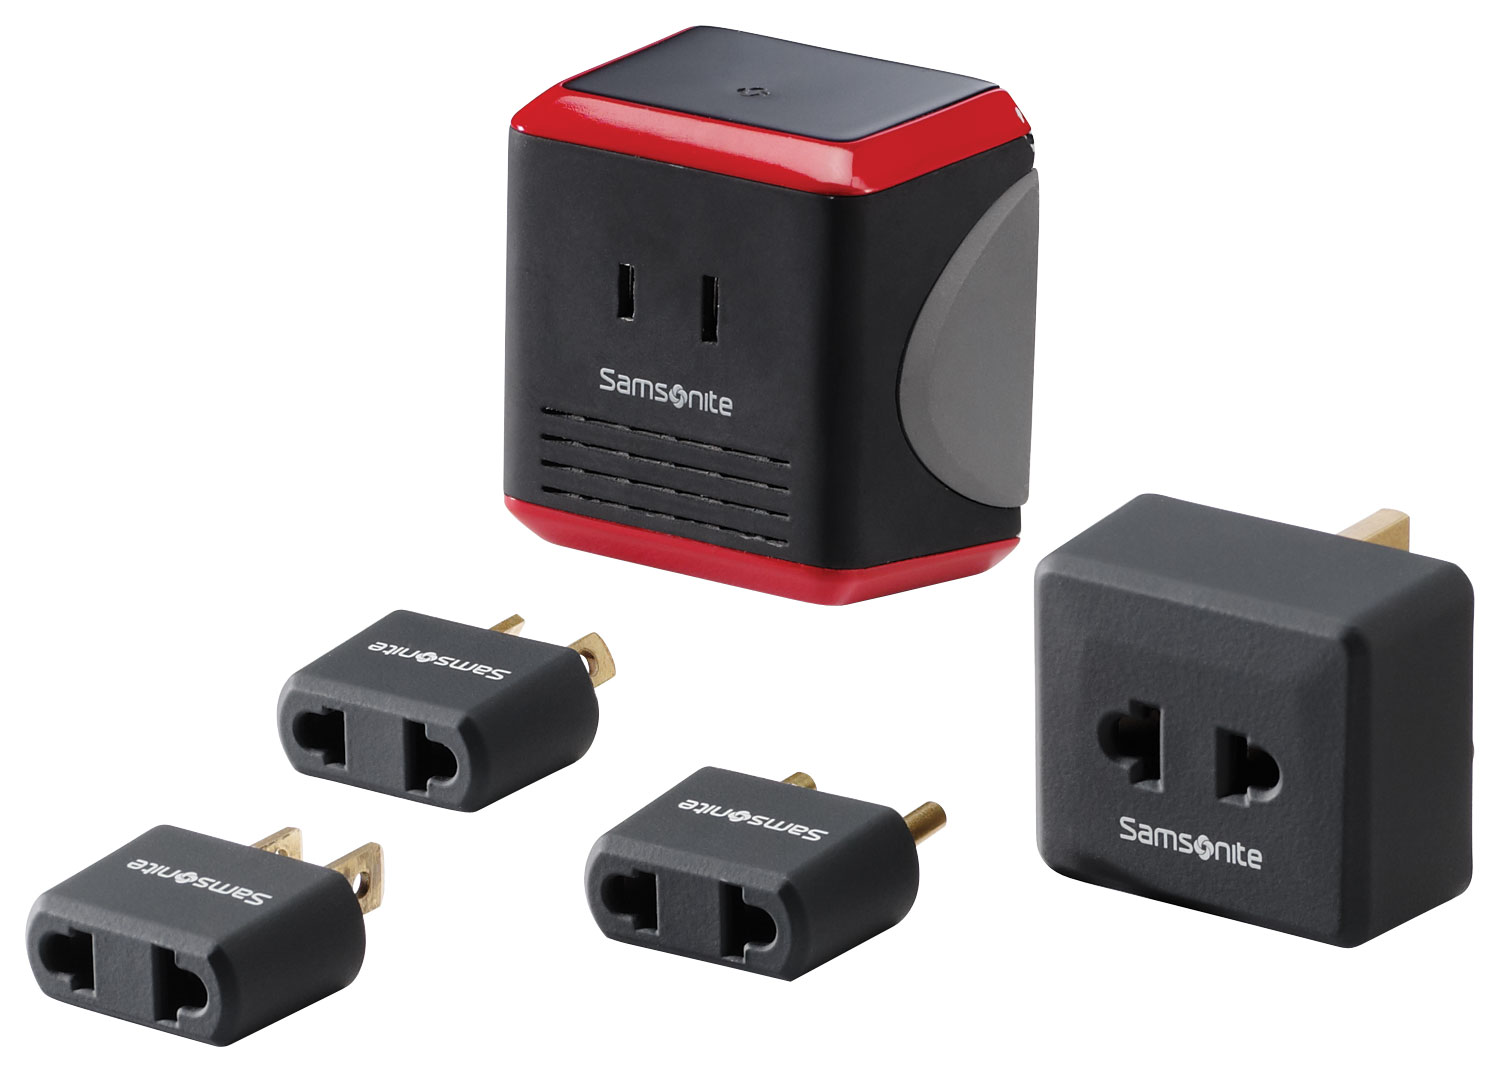 Samsonite - Converter/Adapter Kit - Red/Black was $19.99 now $12.99 (35.0% off)